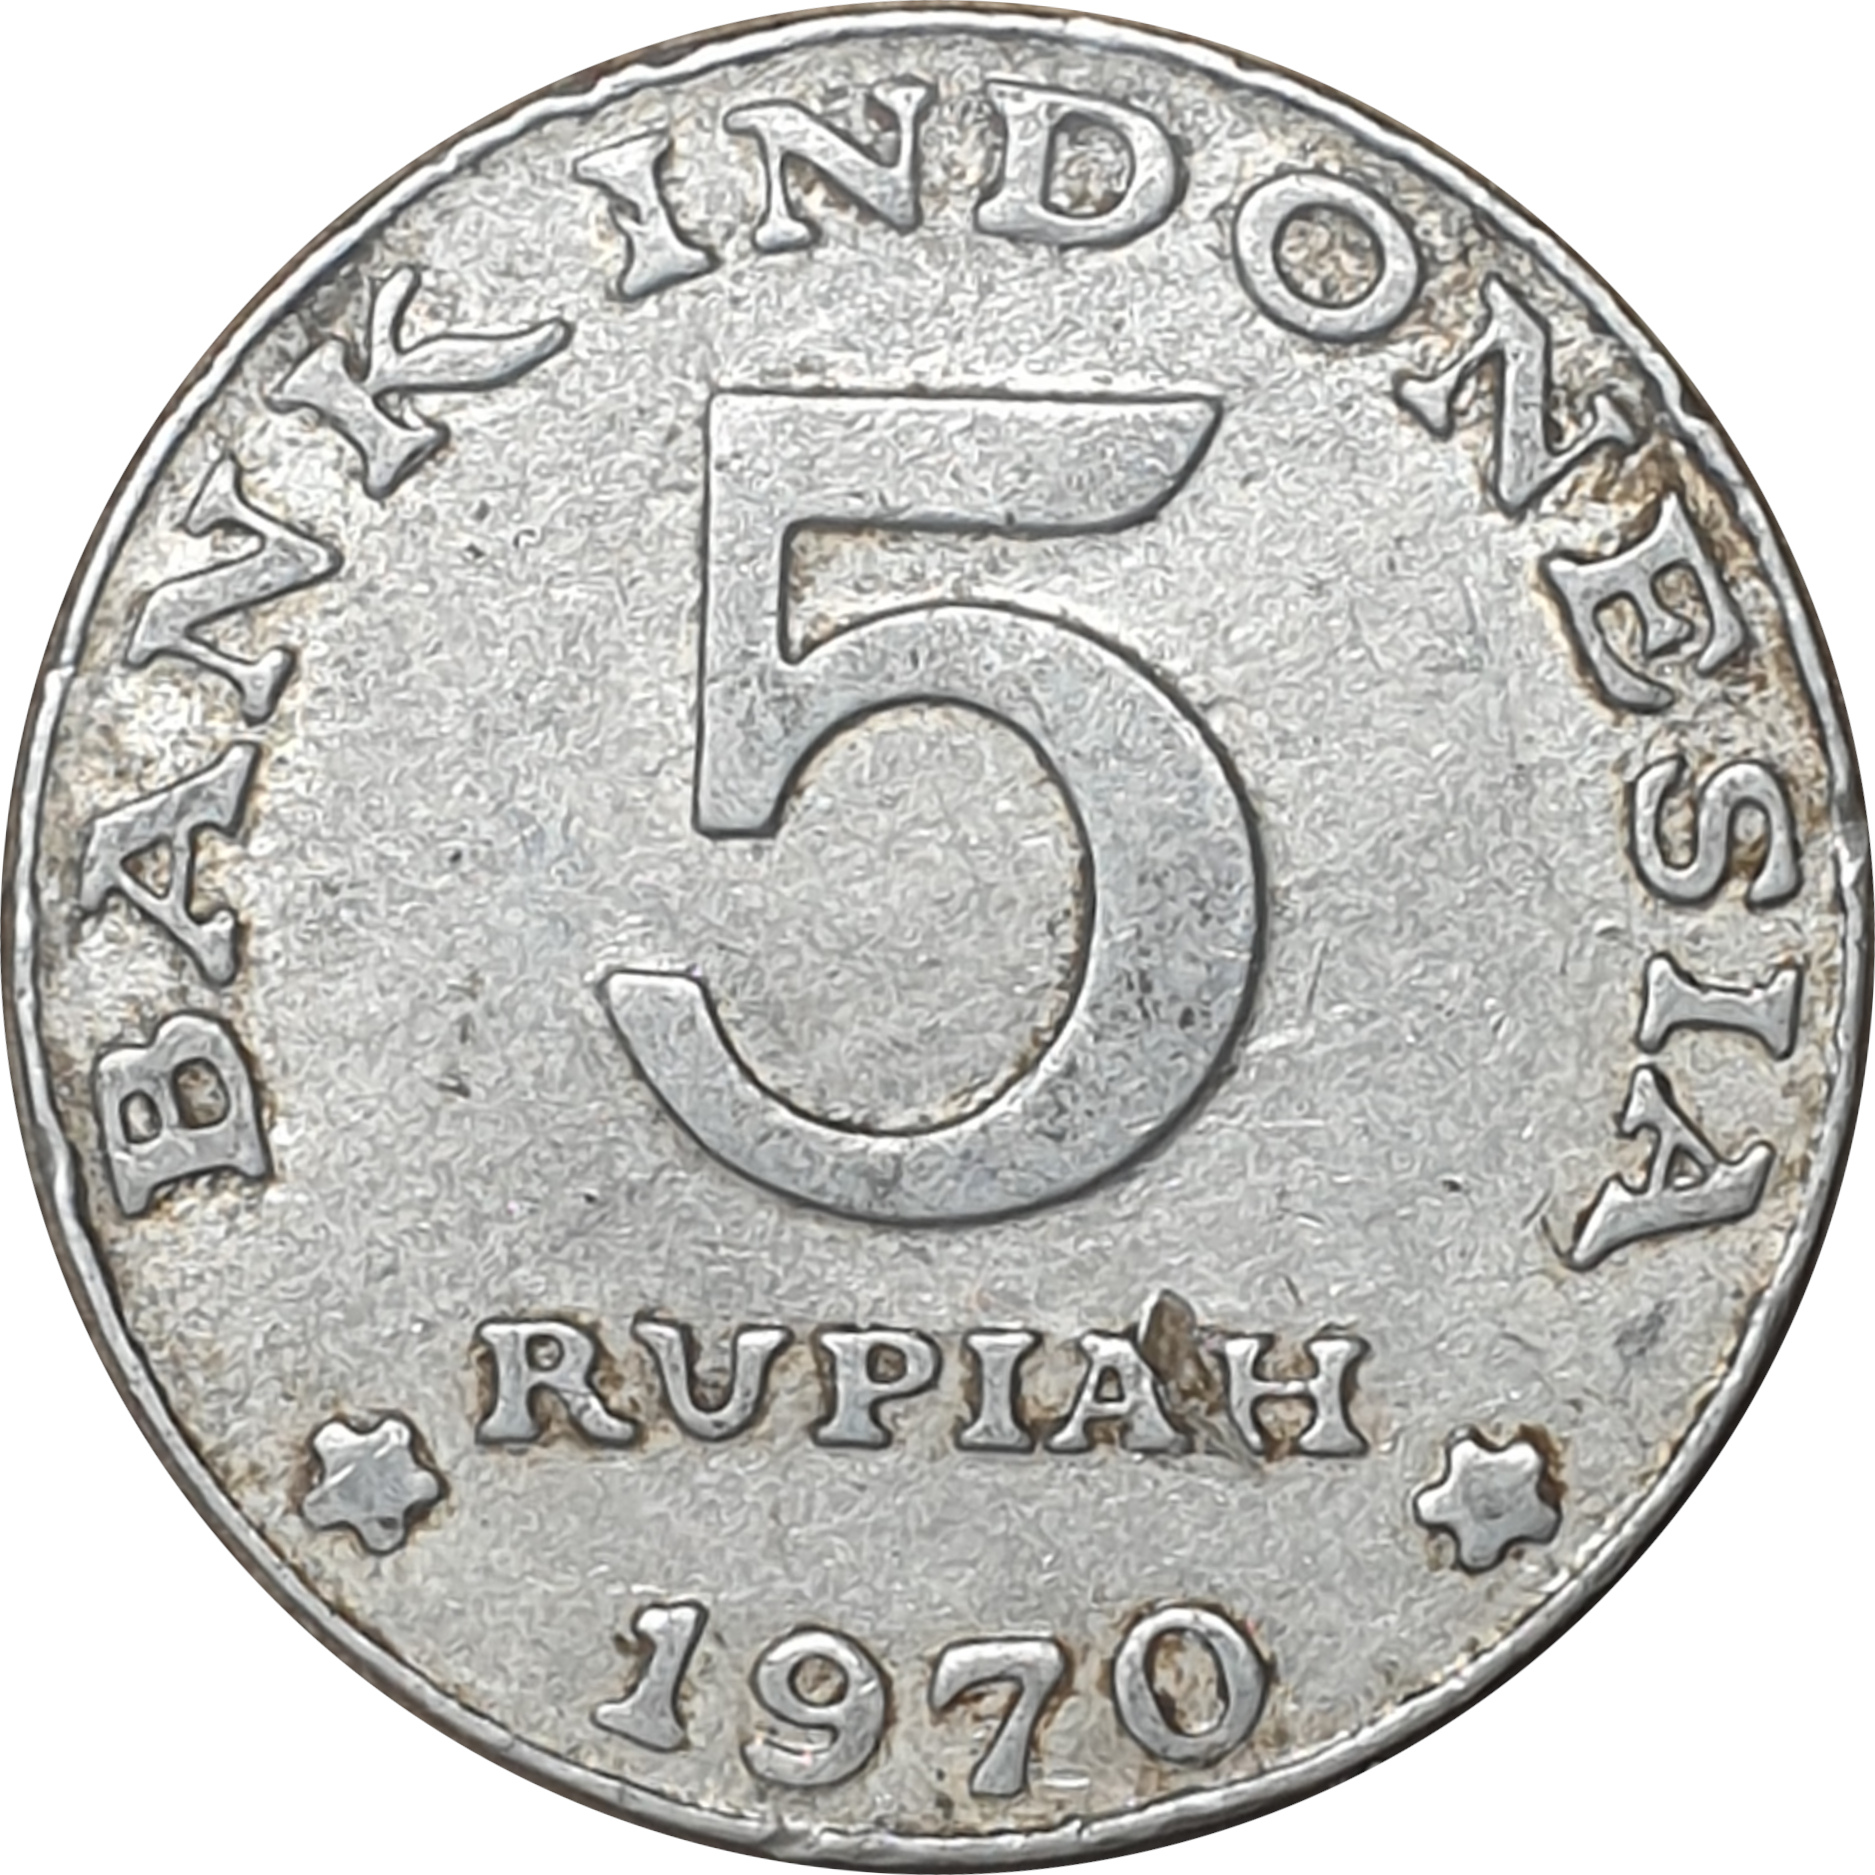 5 rupiah - Black drongo